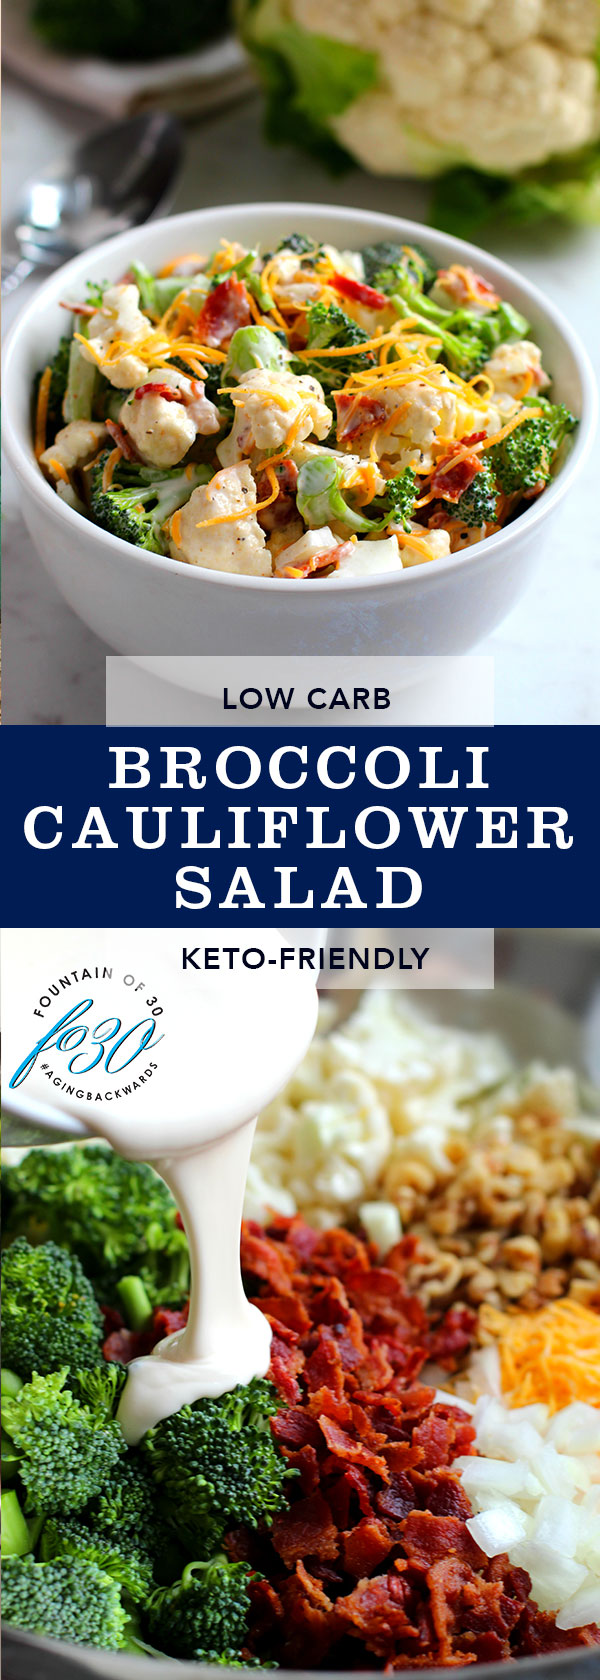 broccoli cauliflower recipe fountainof30